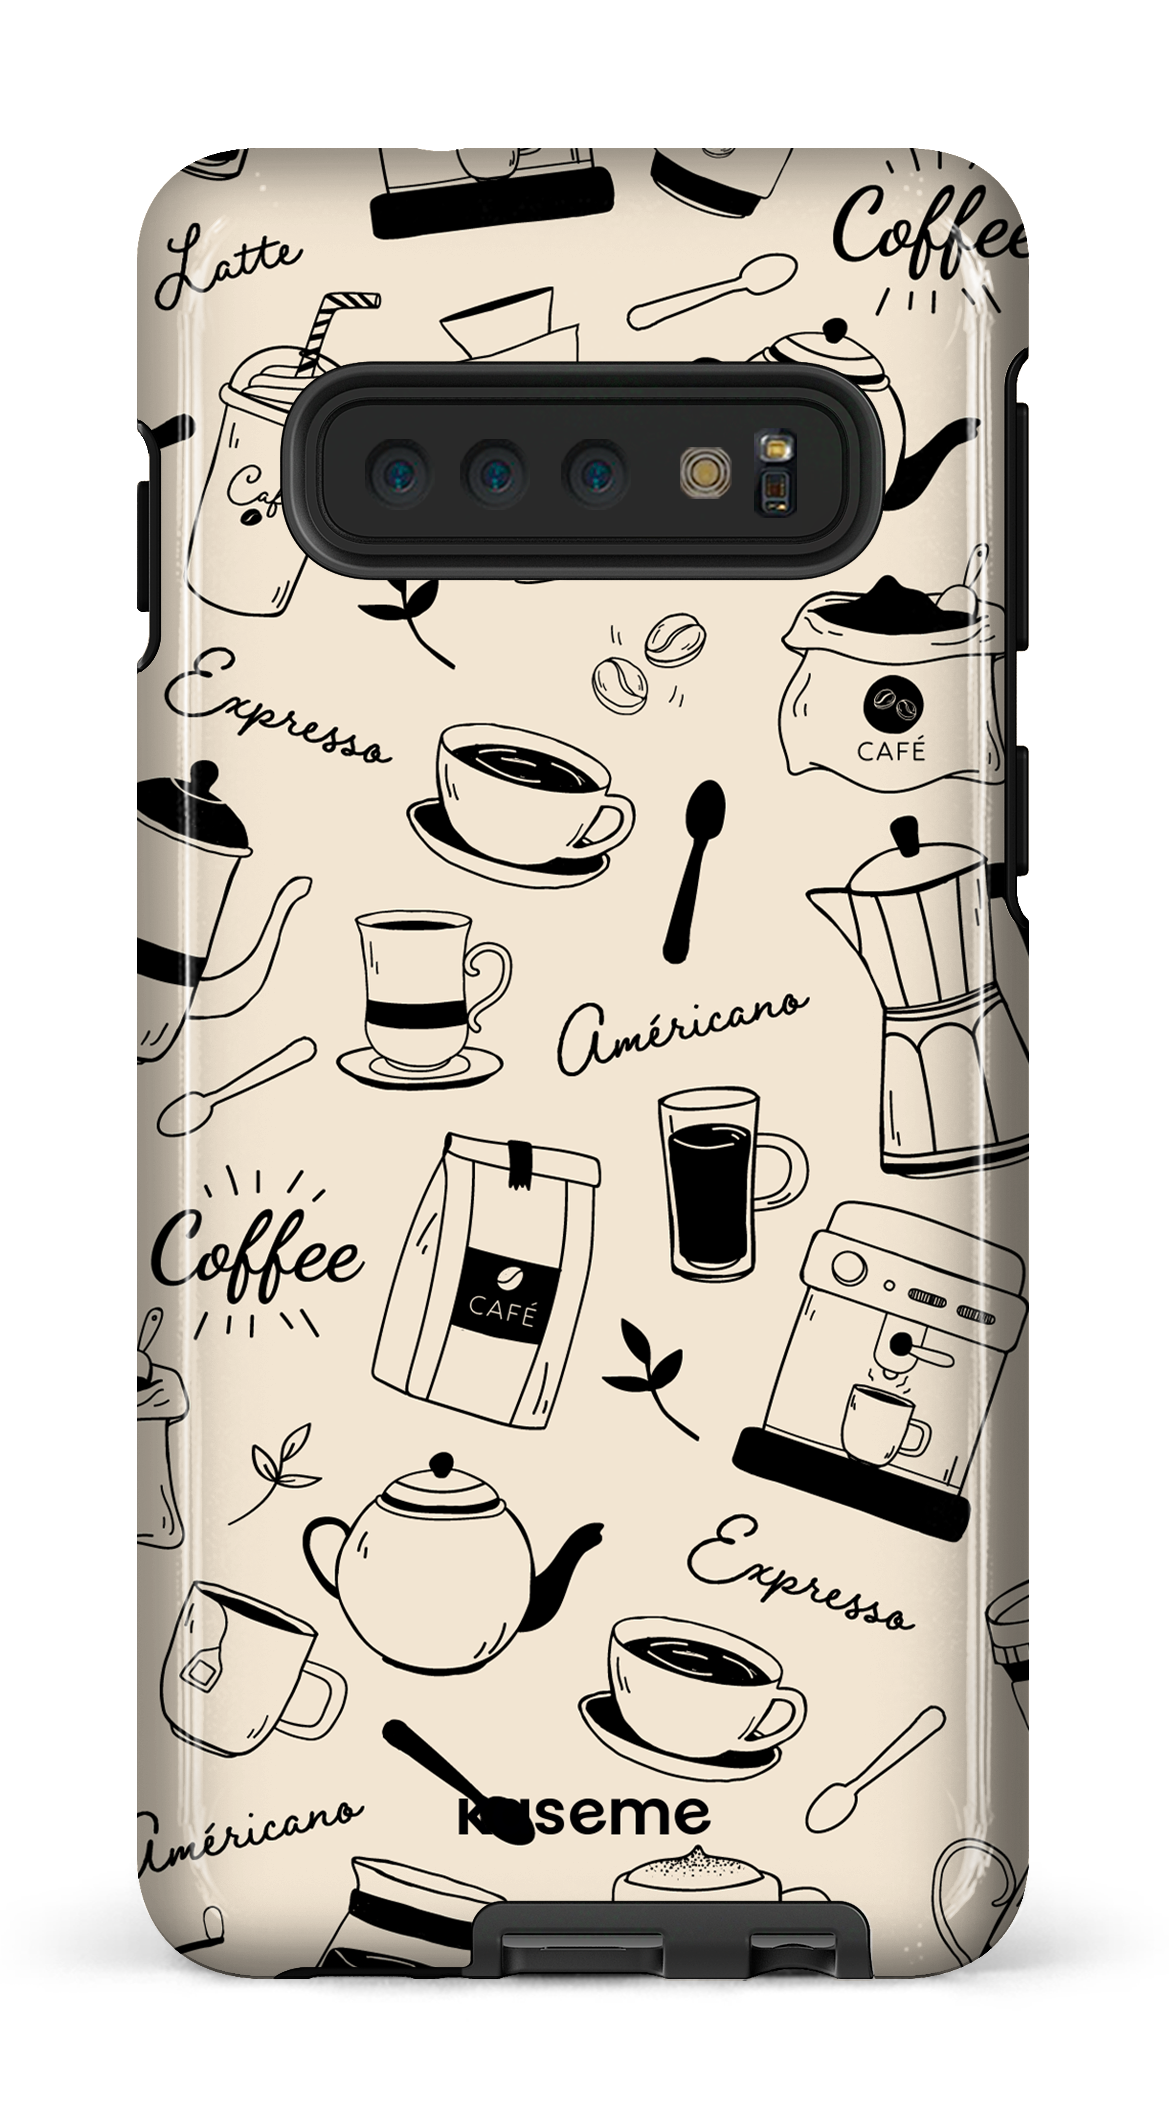 Espresso - Galaxy S10